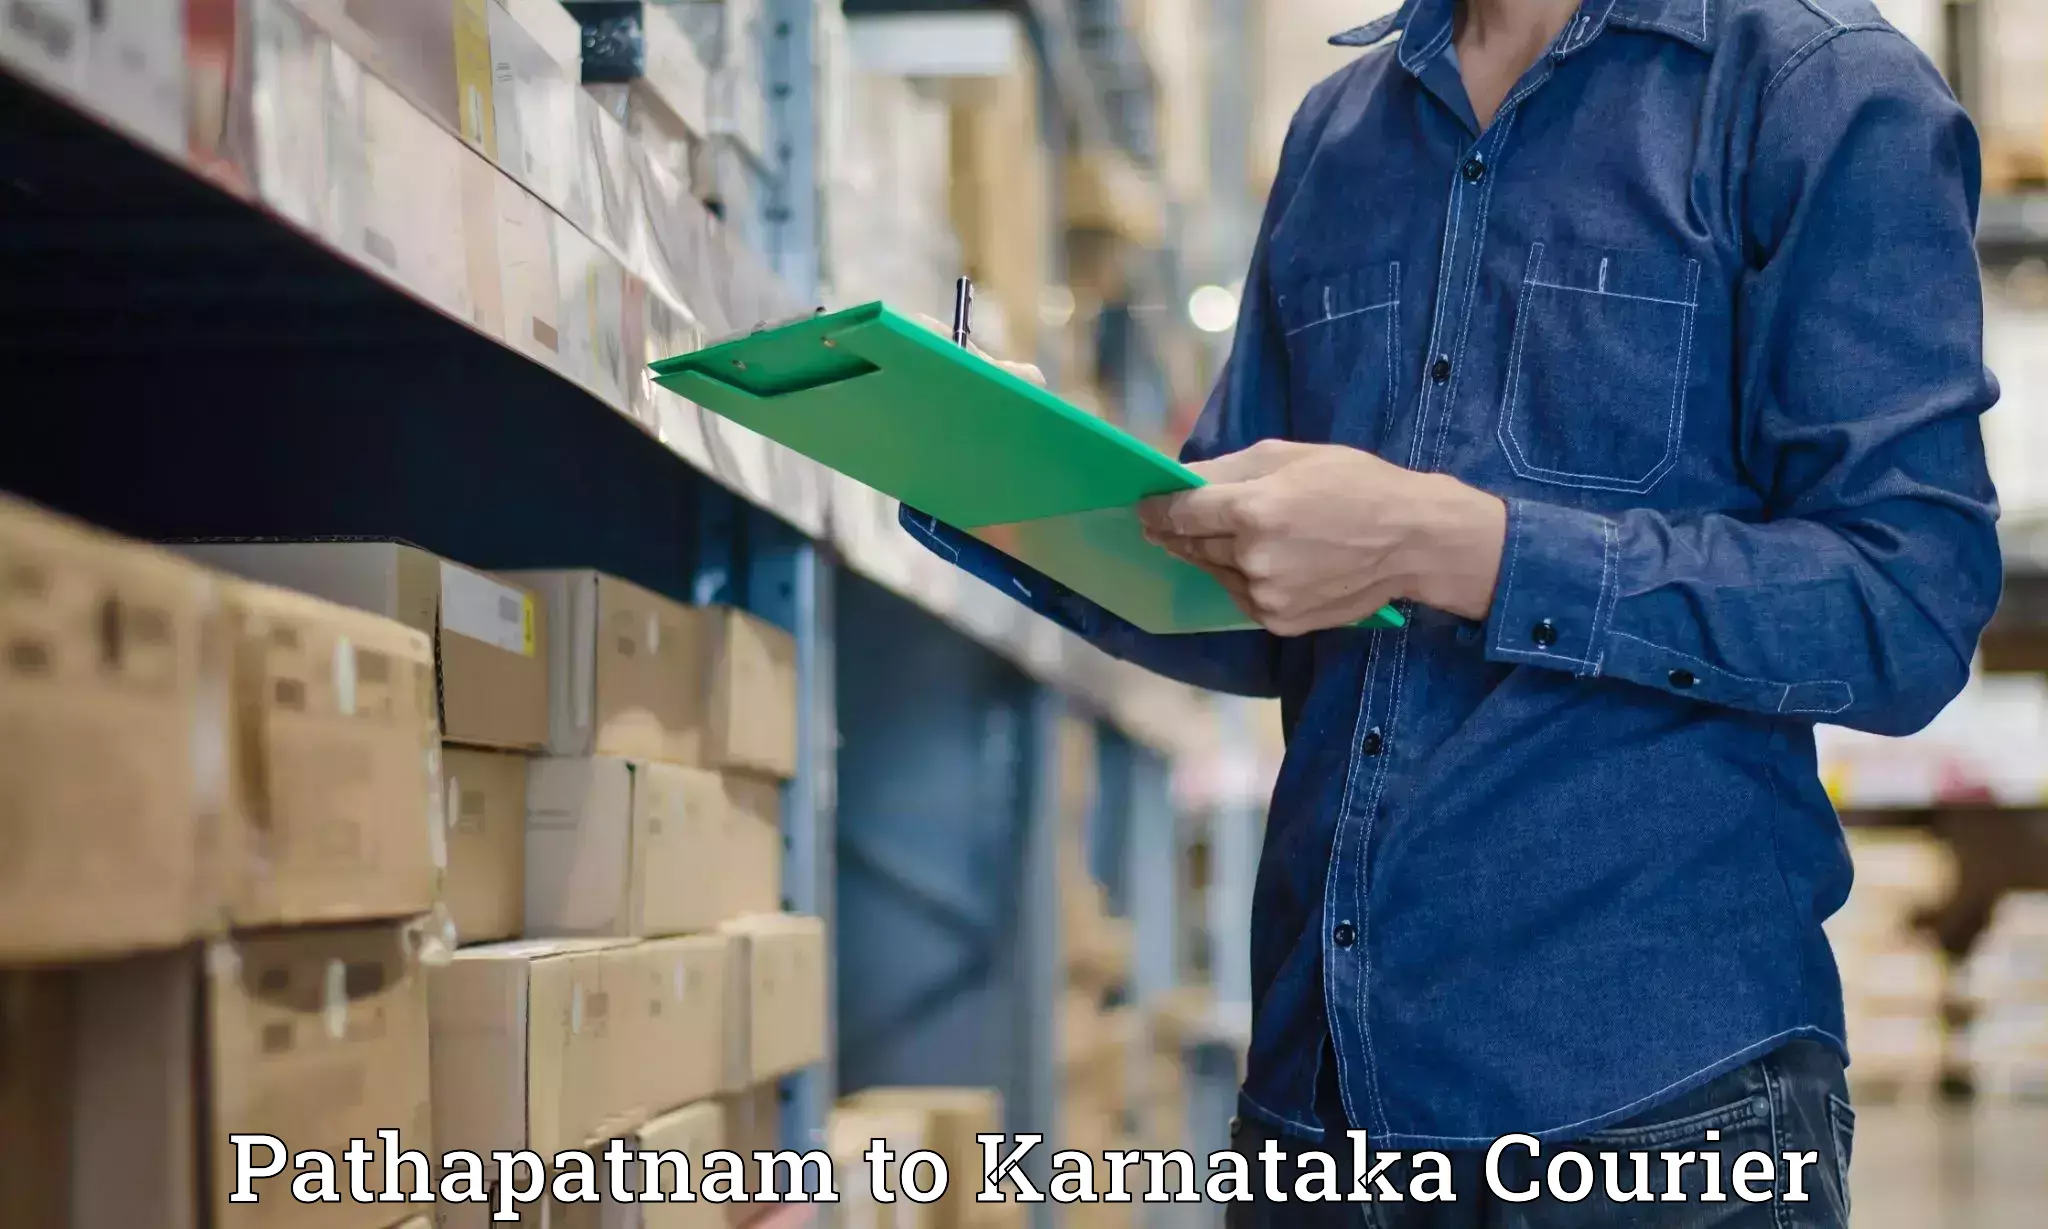 Courier service comparison Pathapatnam to Siruguppa